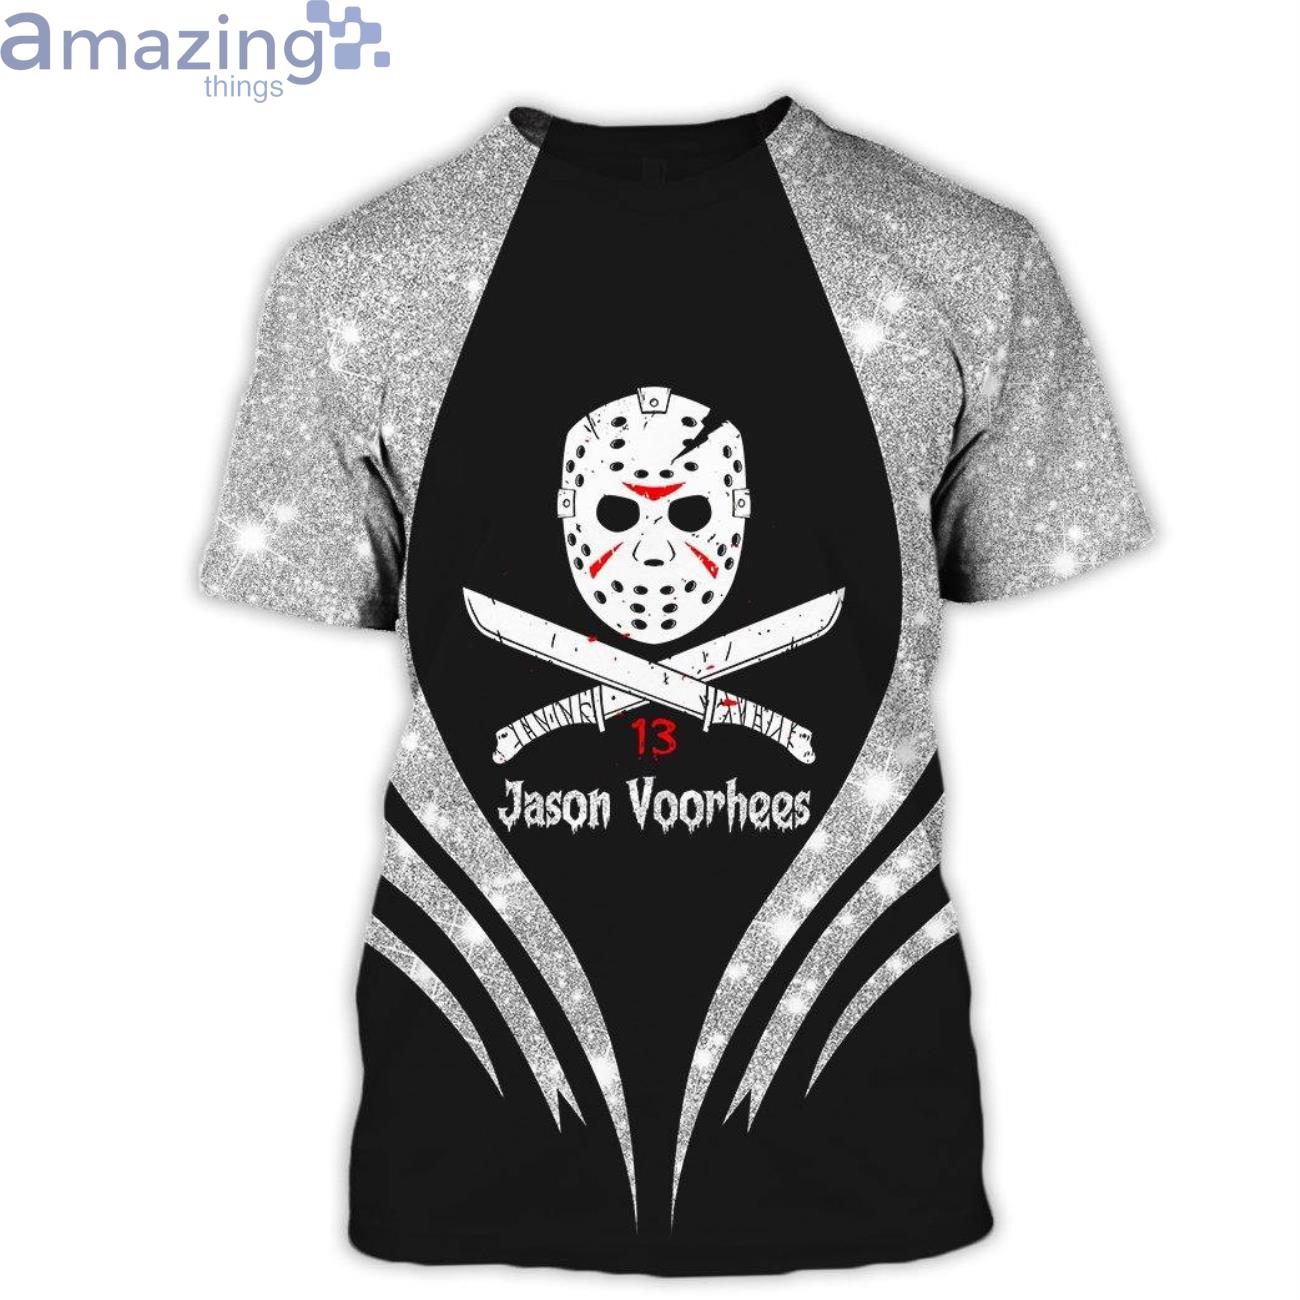 13 Jason Voorhees Halloween T-Shirt Product Photo 1